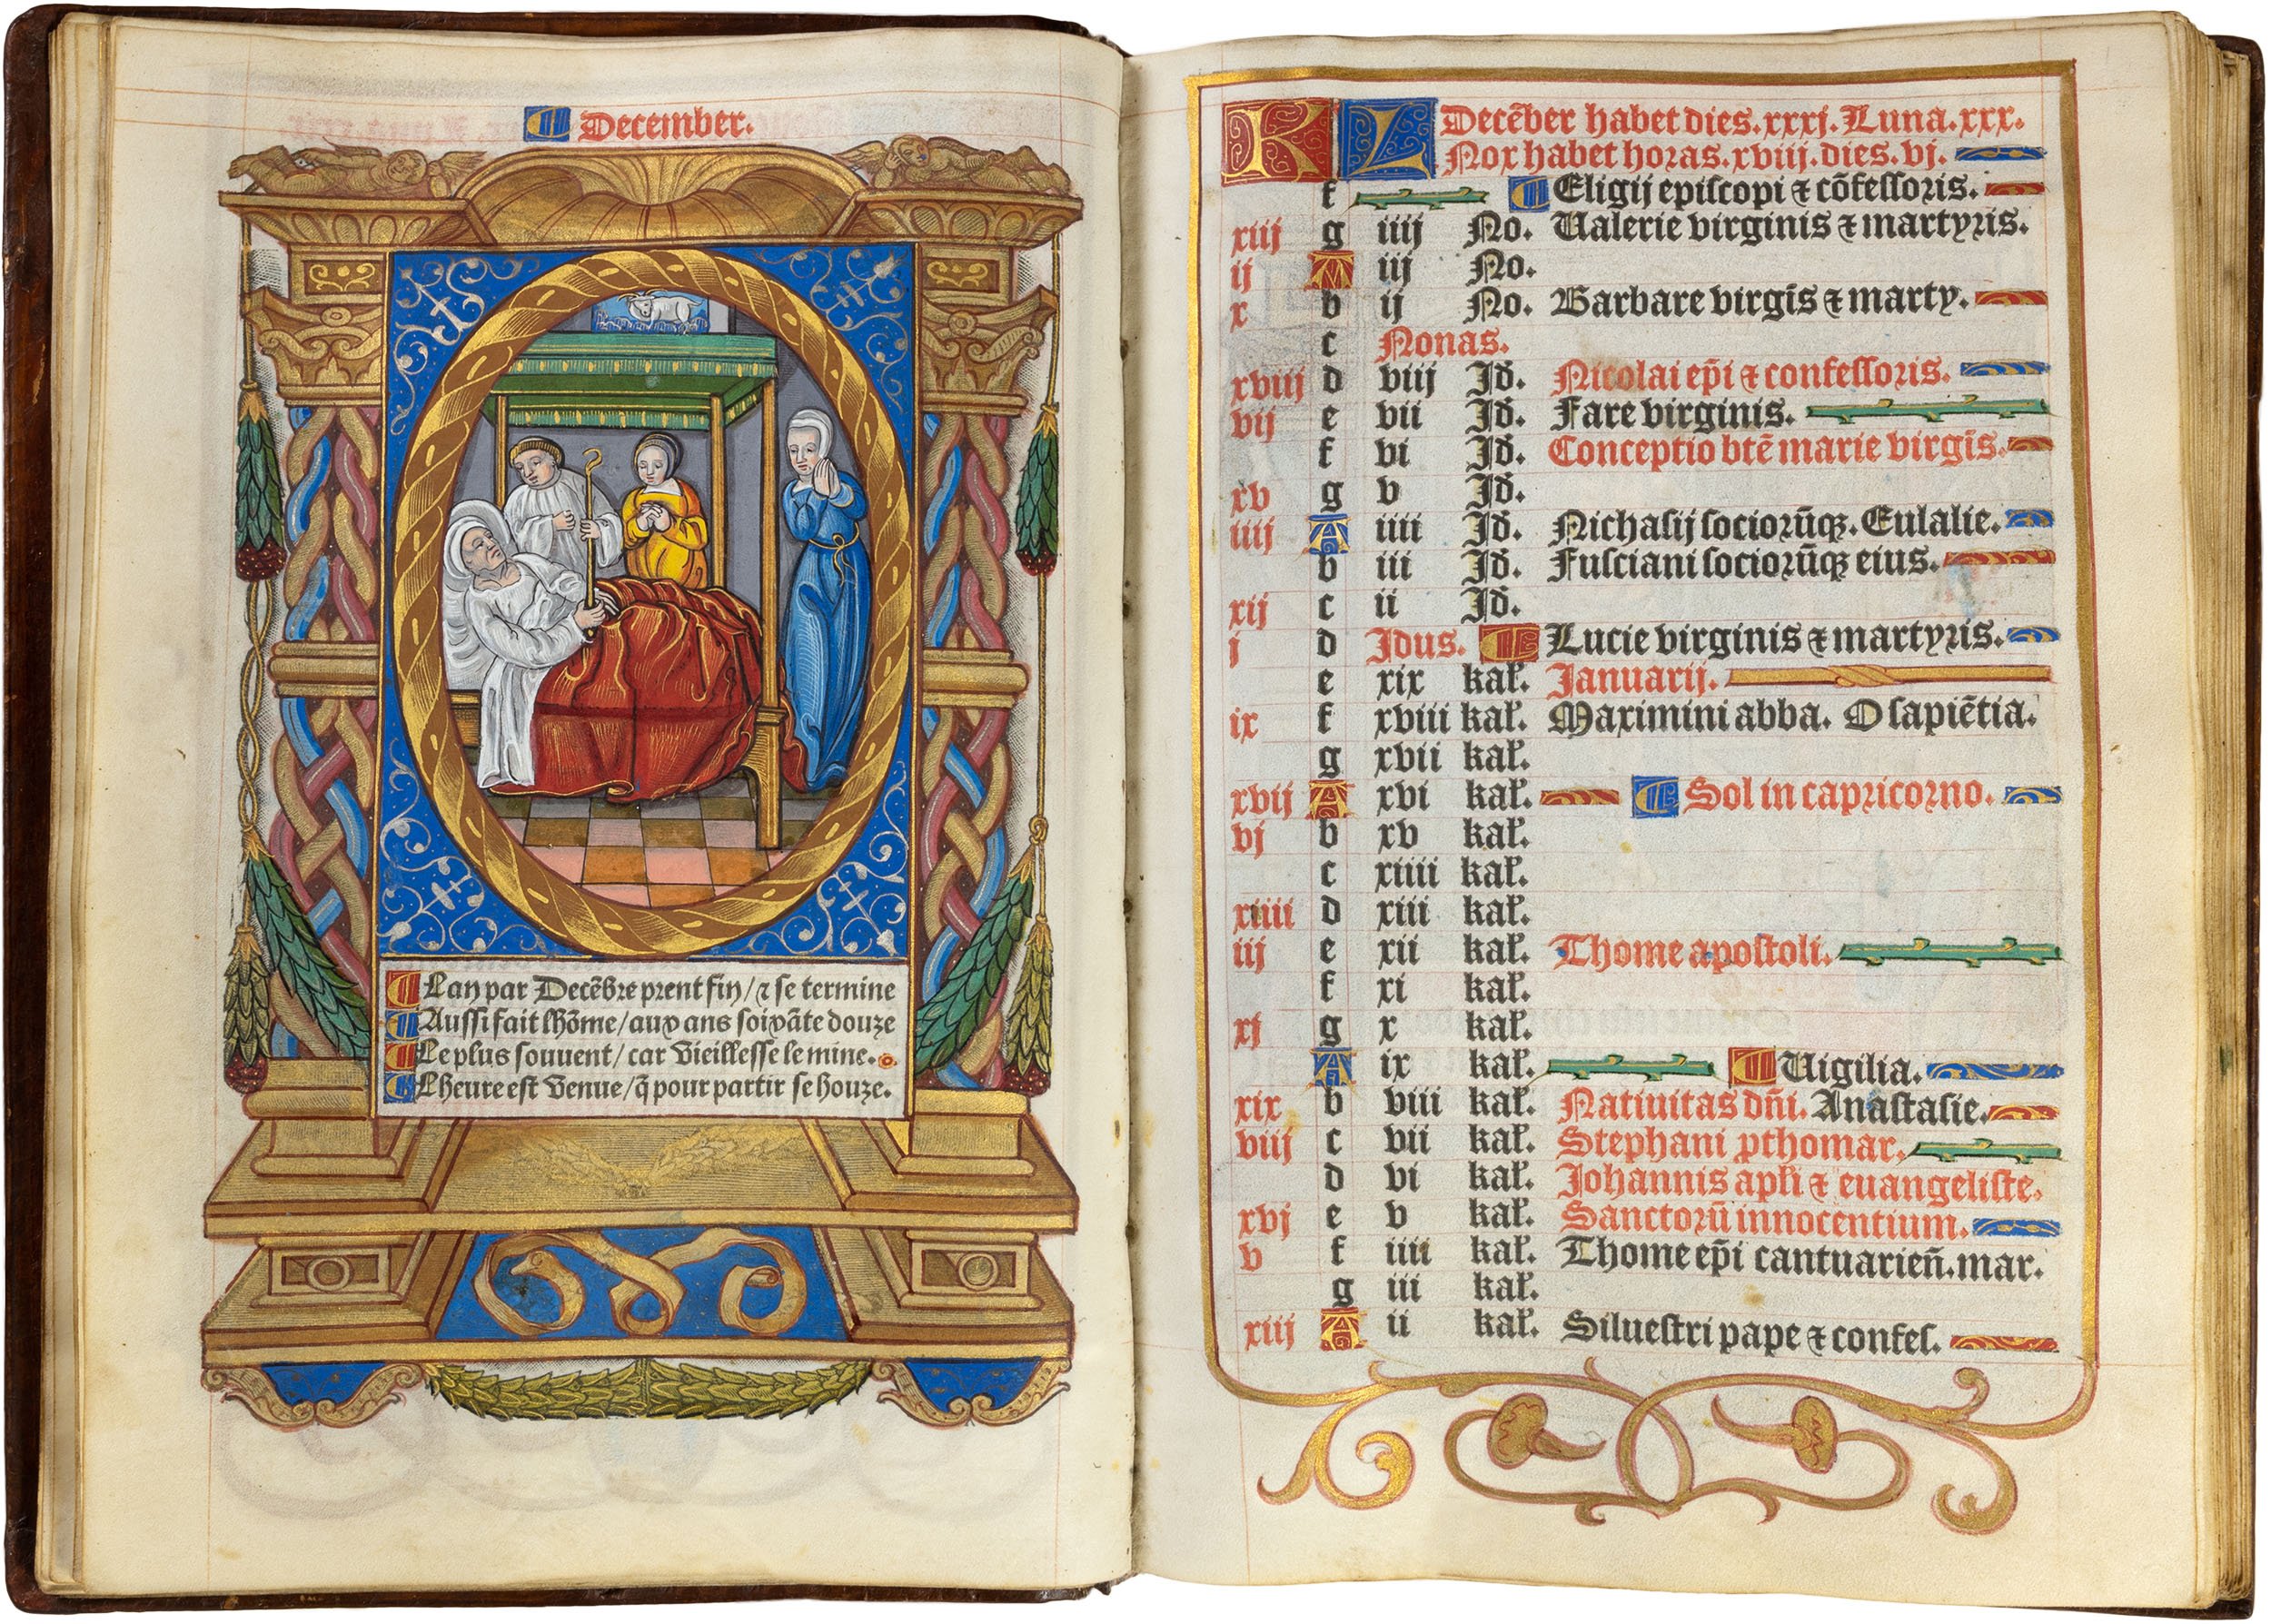 Printed-Book-of-hours-Anne-de-Montmorency-16-february-1523-kerver-yolande-bonhomme-illuminated-vellum-copy-16.jpg